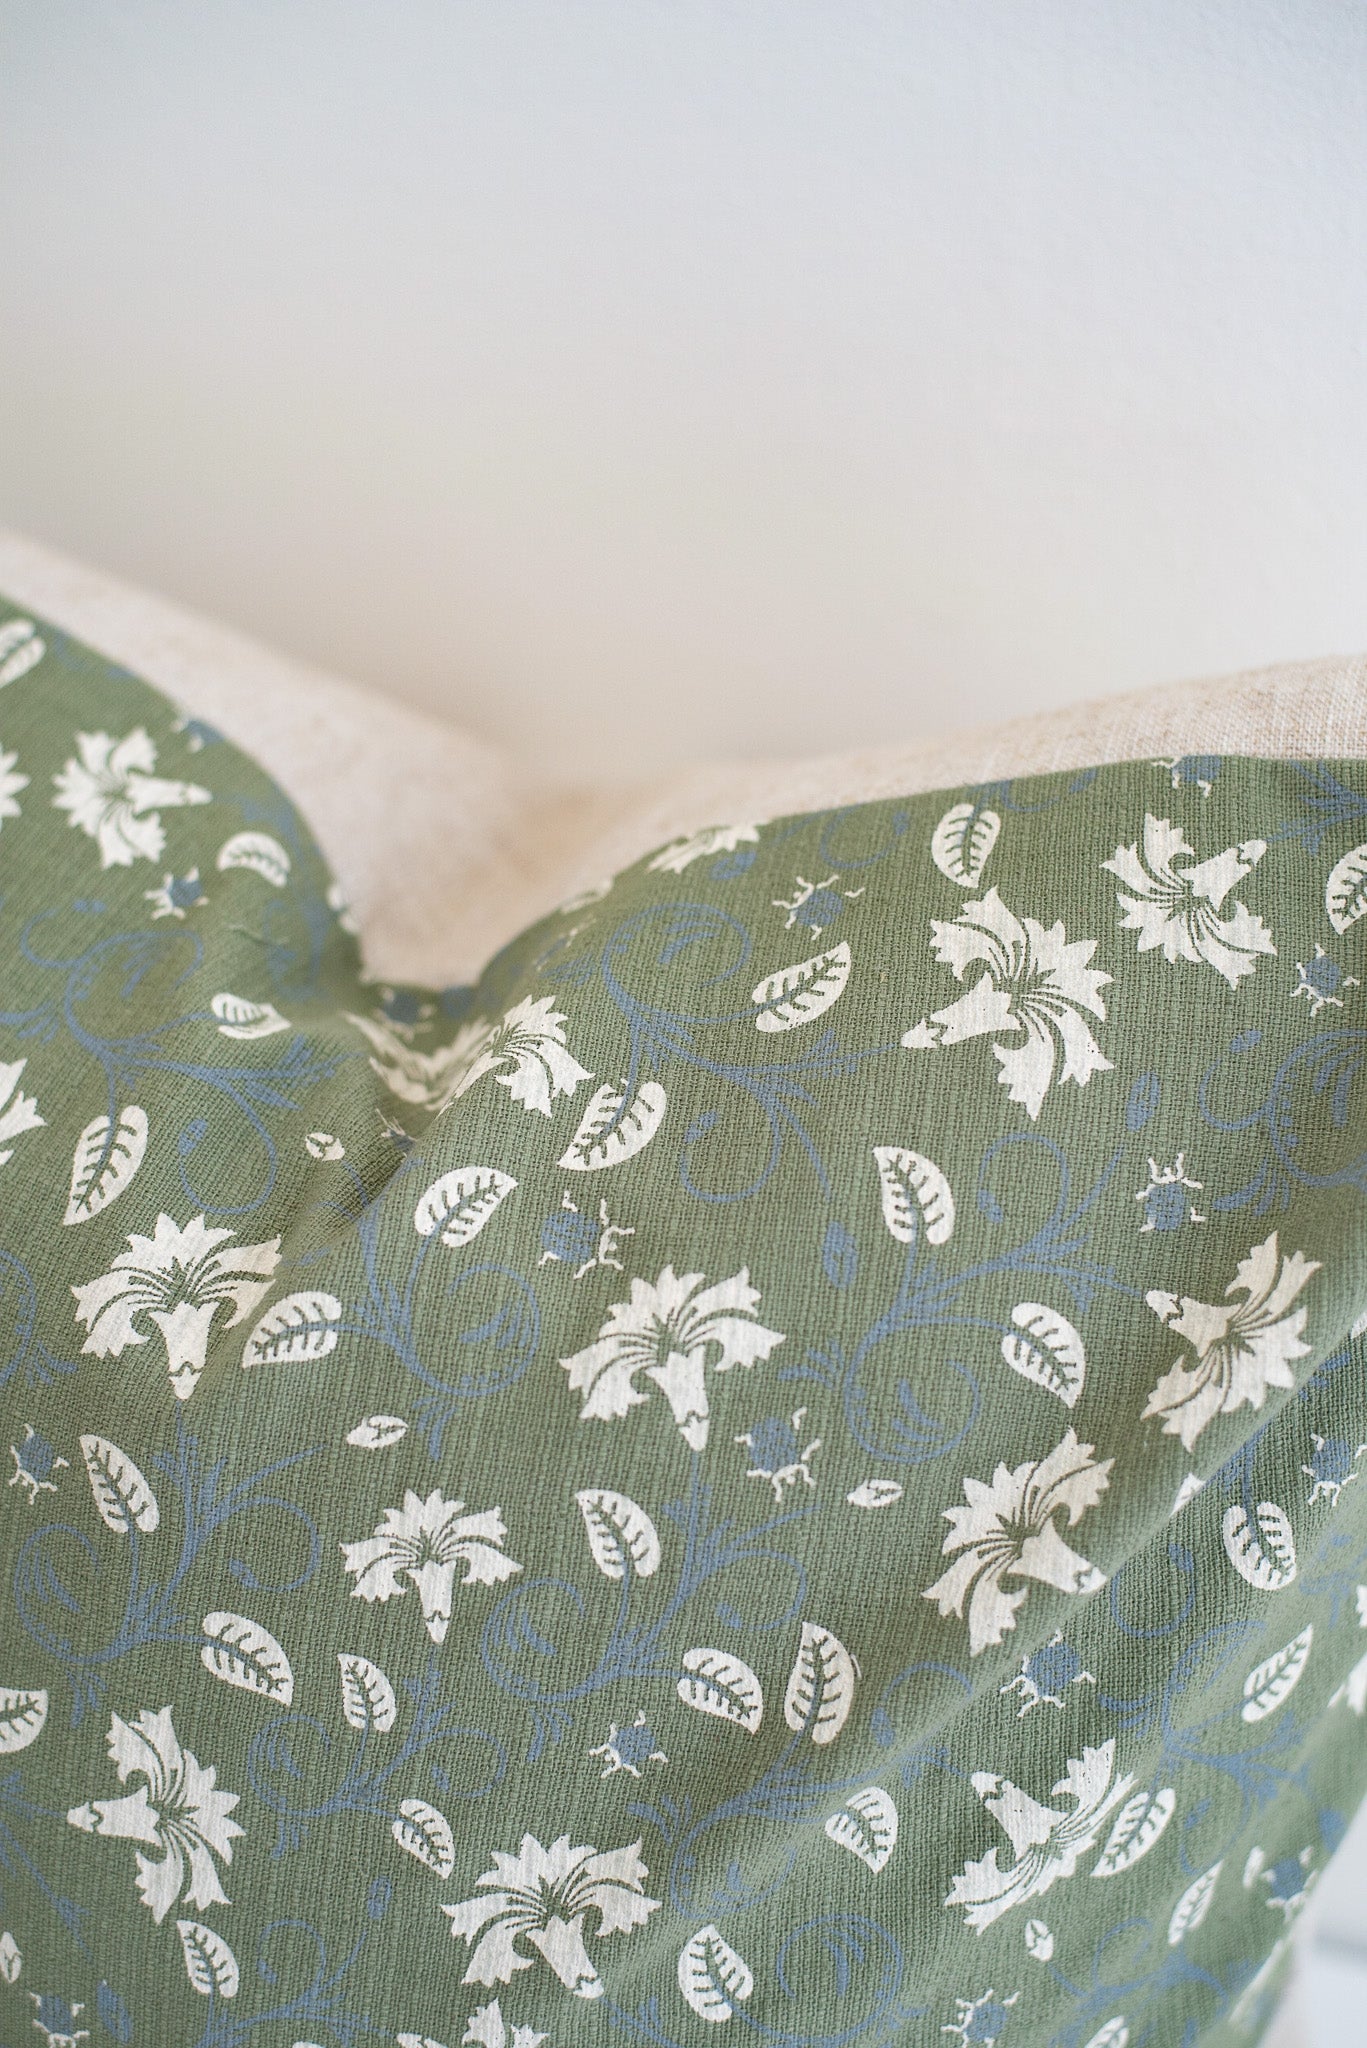 Green Floral Pillow. Artisan made Pillow Cover.